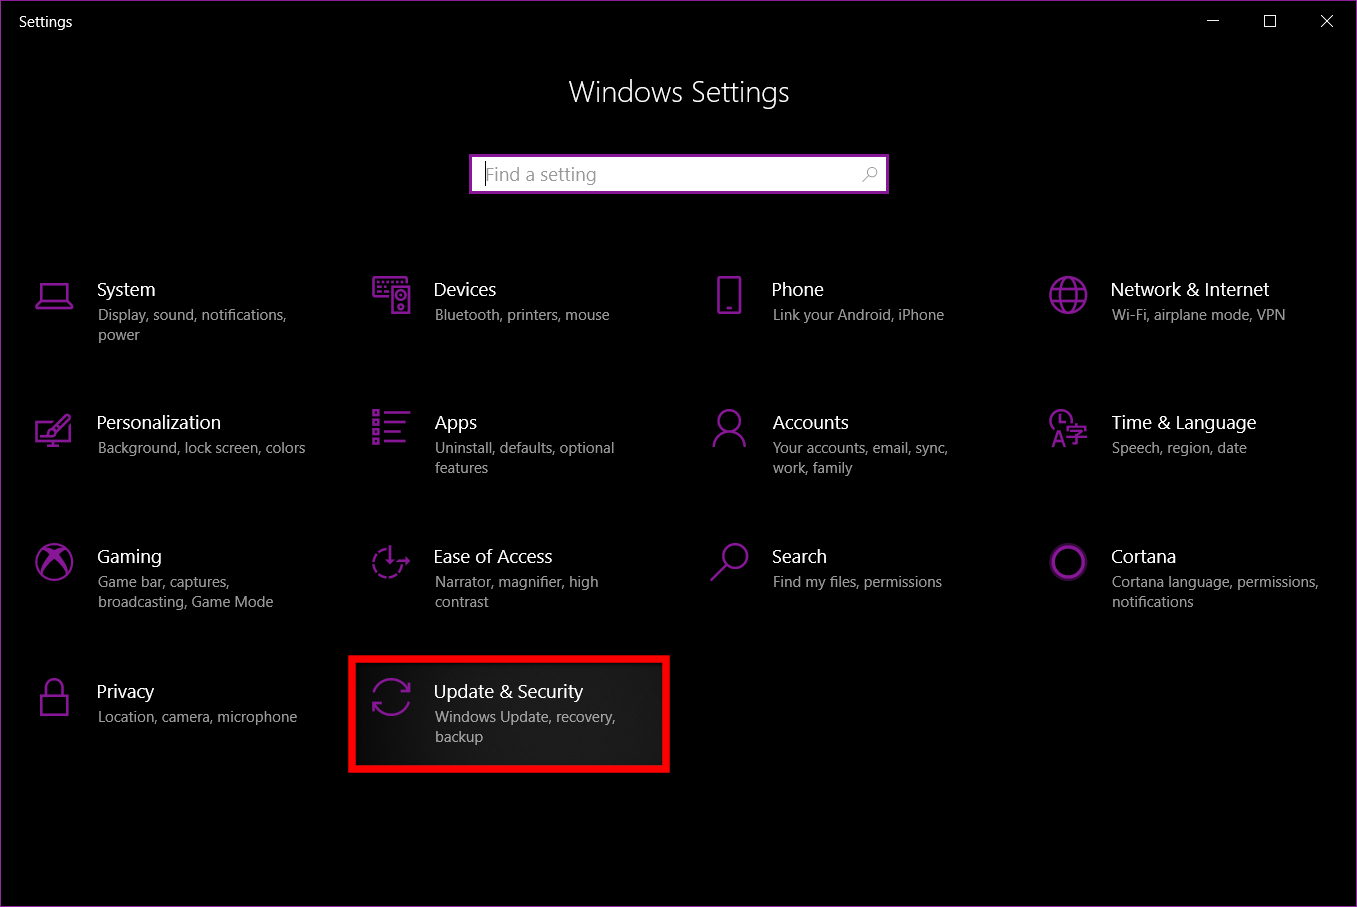 Windows update settings menu.